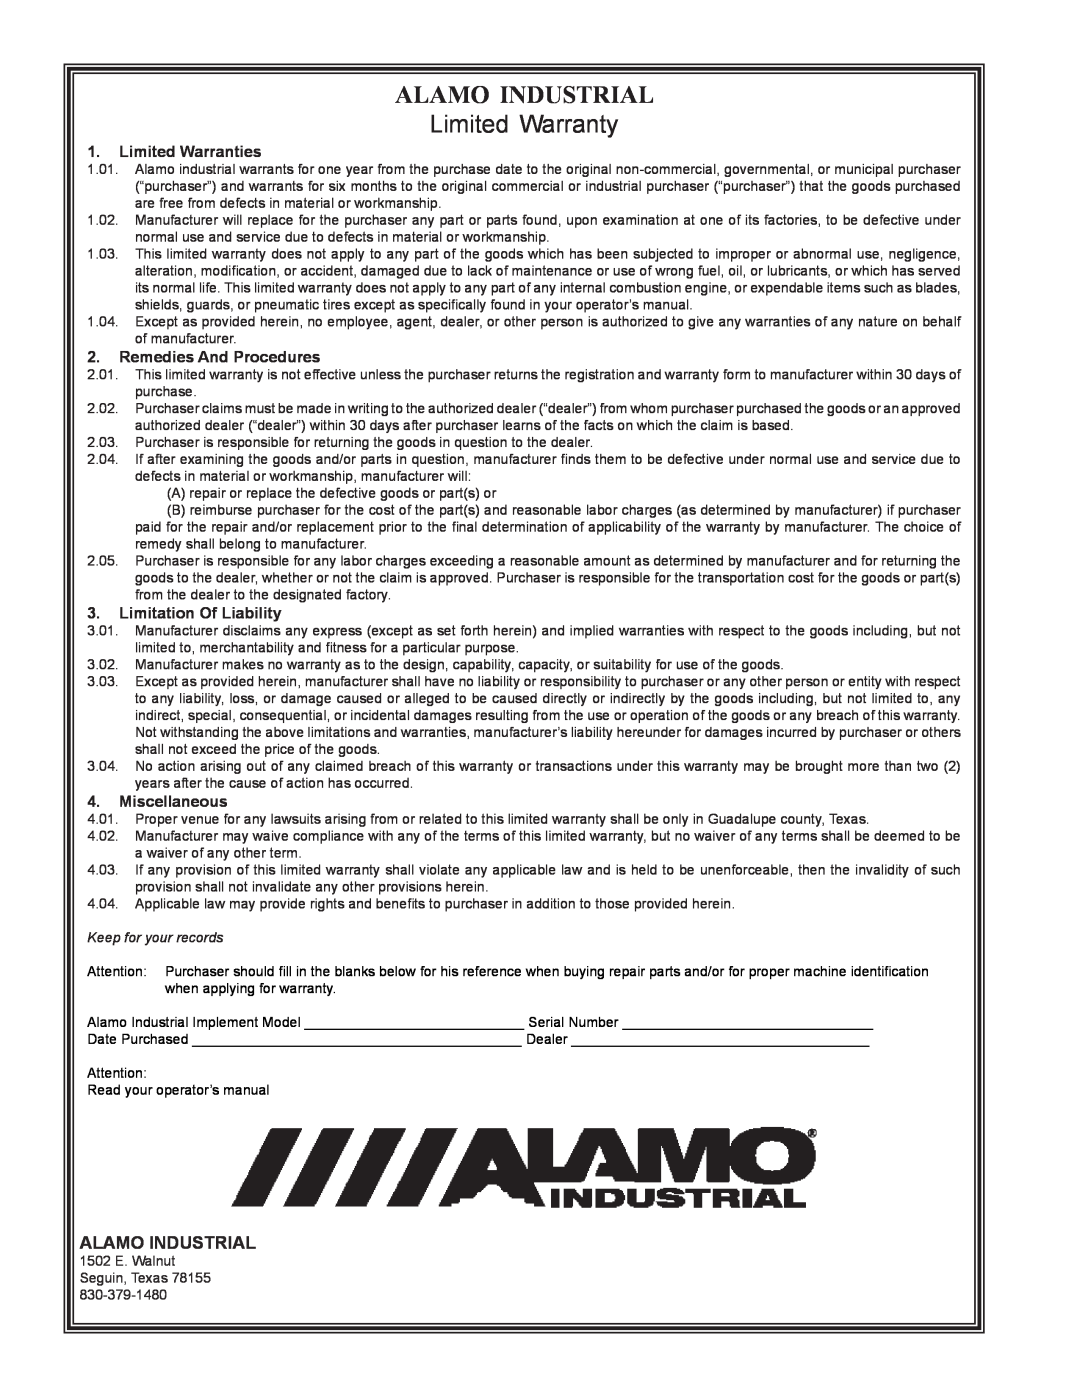 Alamo 02968915P Alamo Industrial, Limited Warranty, Limited Warranties, Remedies And Procedures, Limitation Of Liability 